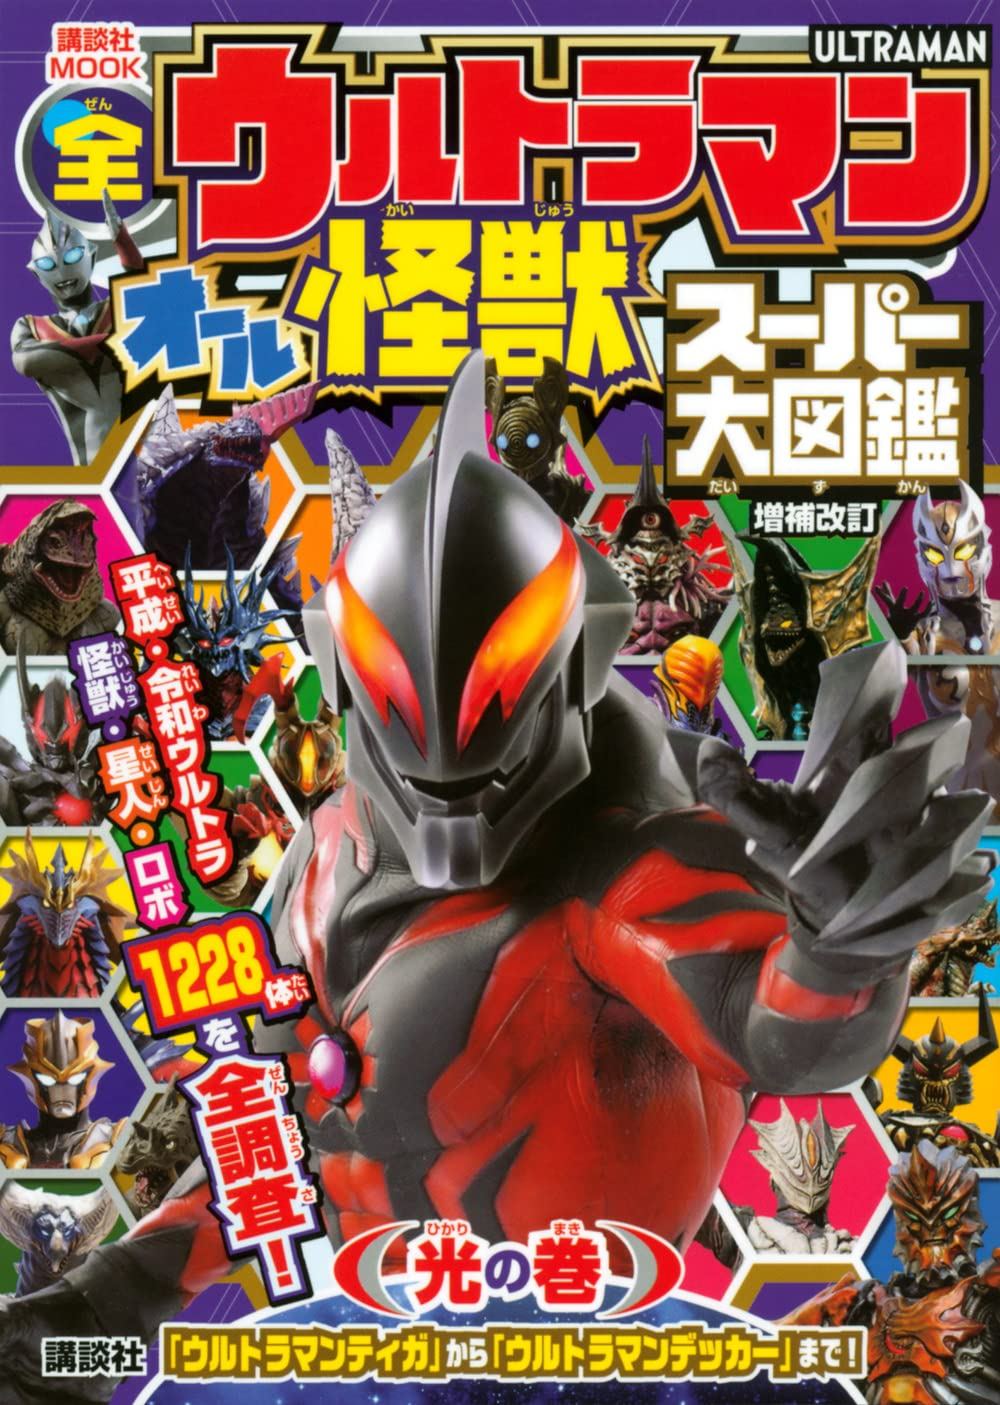 All Ultraman Monster Super Encyclopedia Hikari No Maki